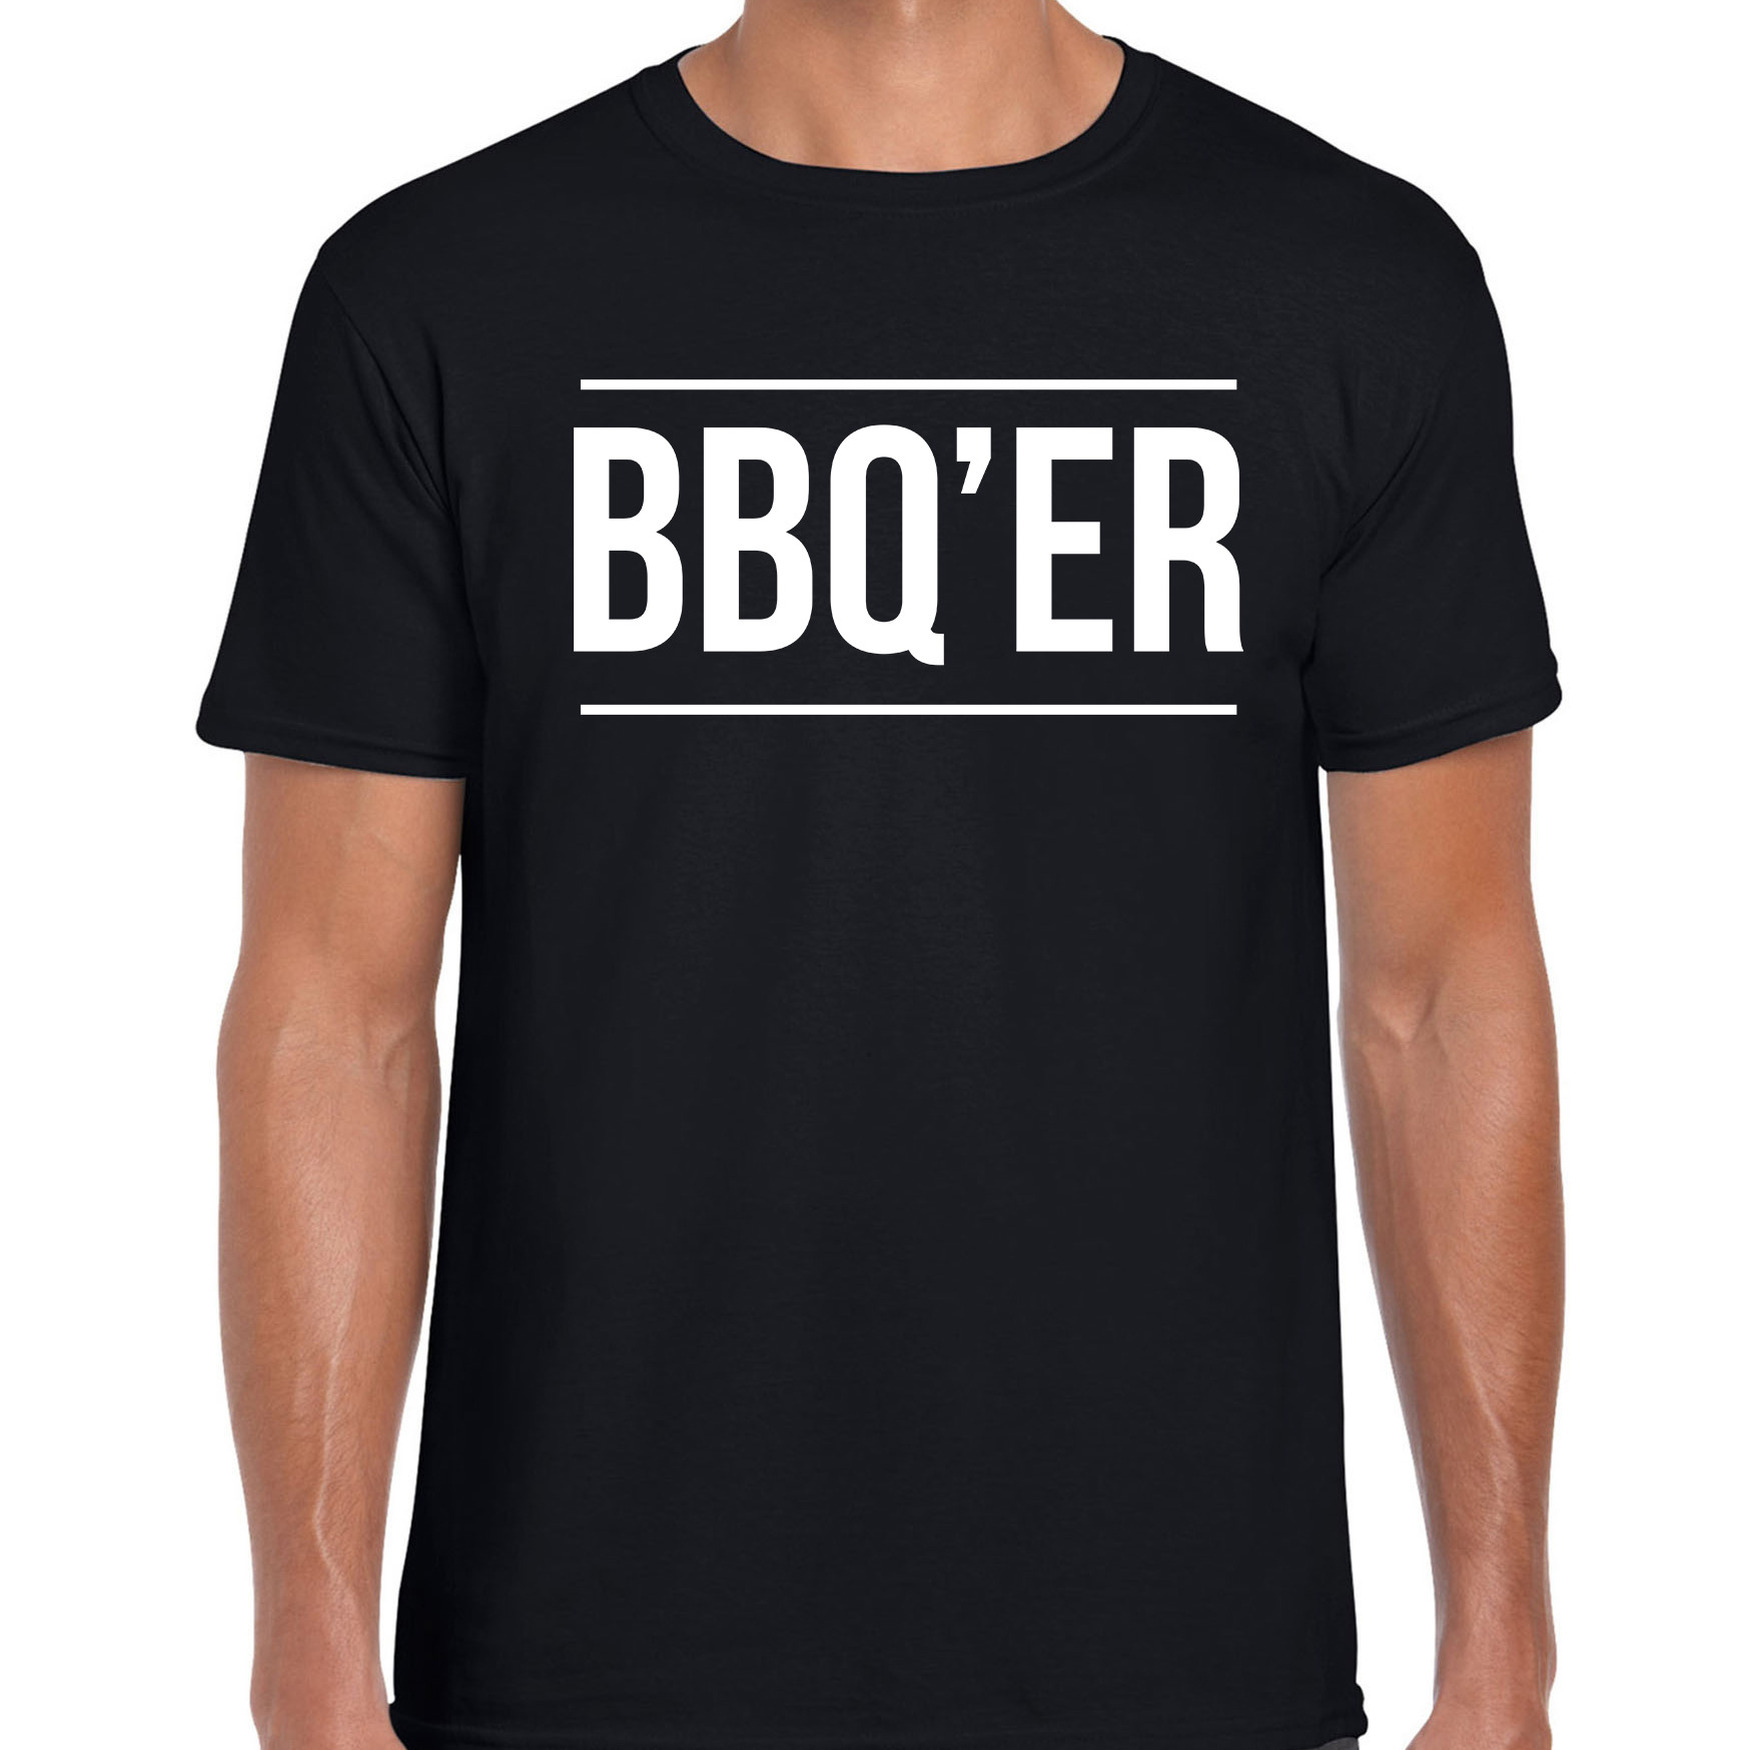 BBQ-ER bbq-barbecue cadeau t-shirt zwart voor heren